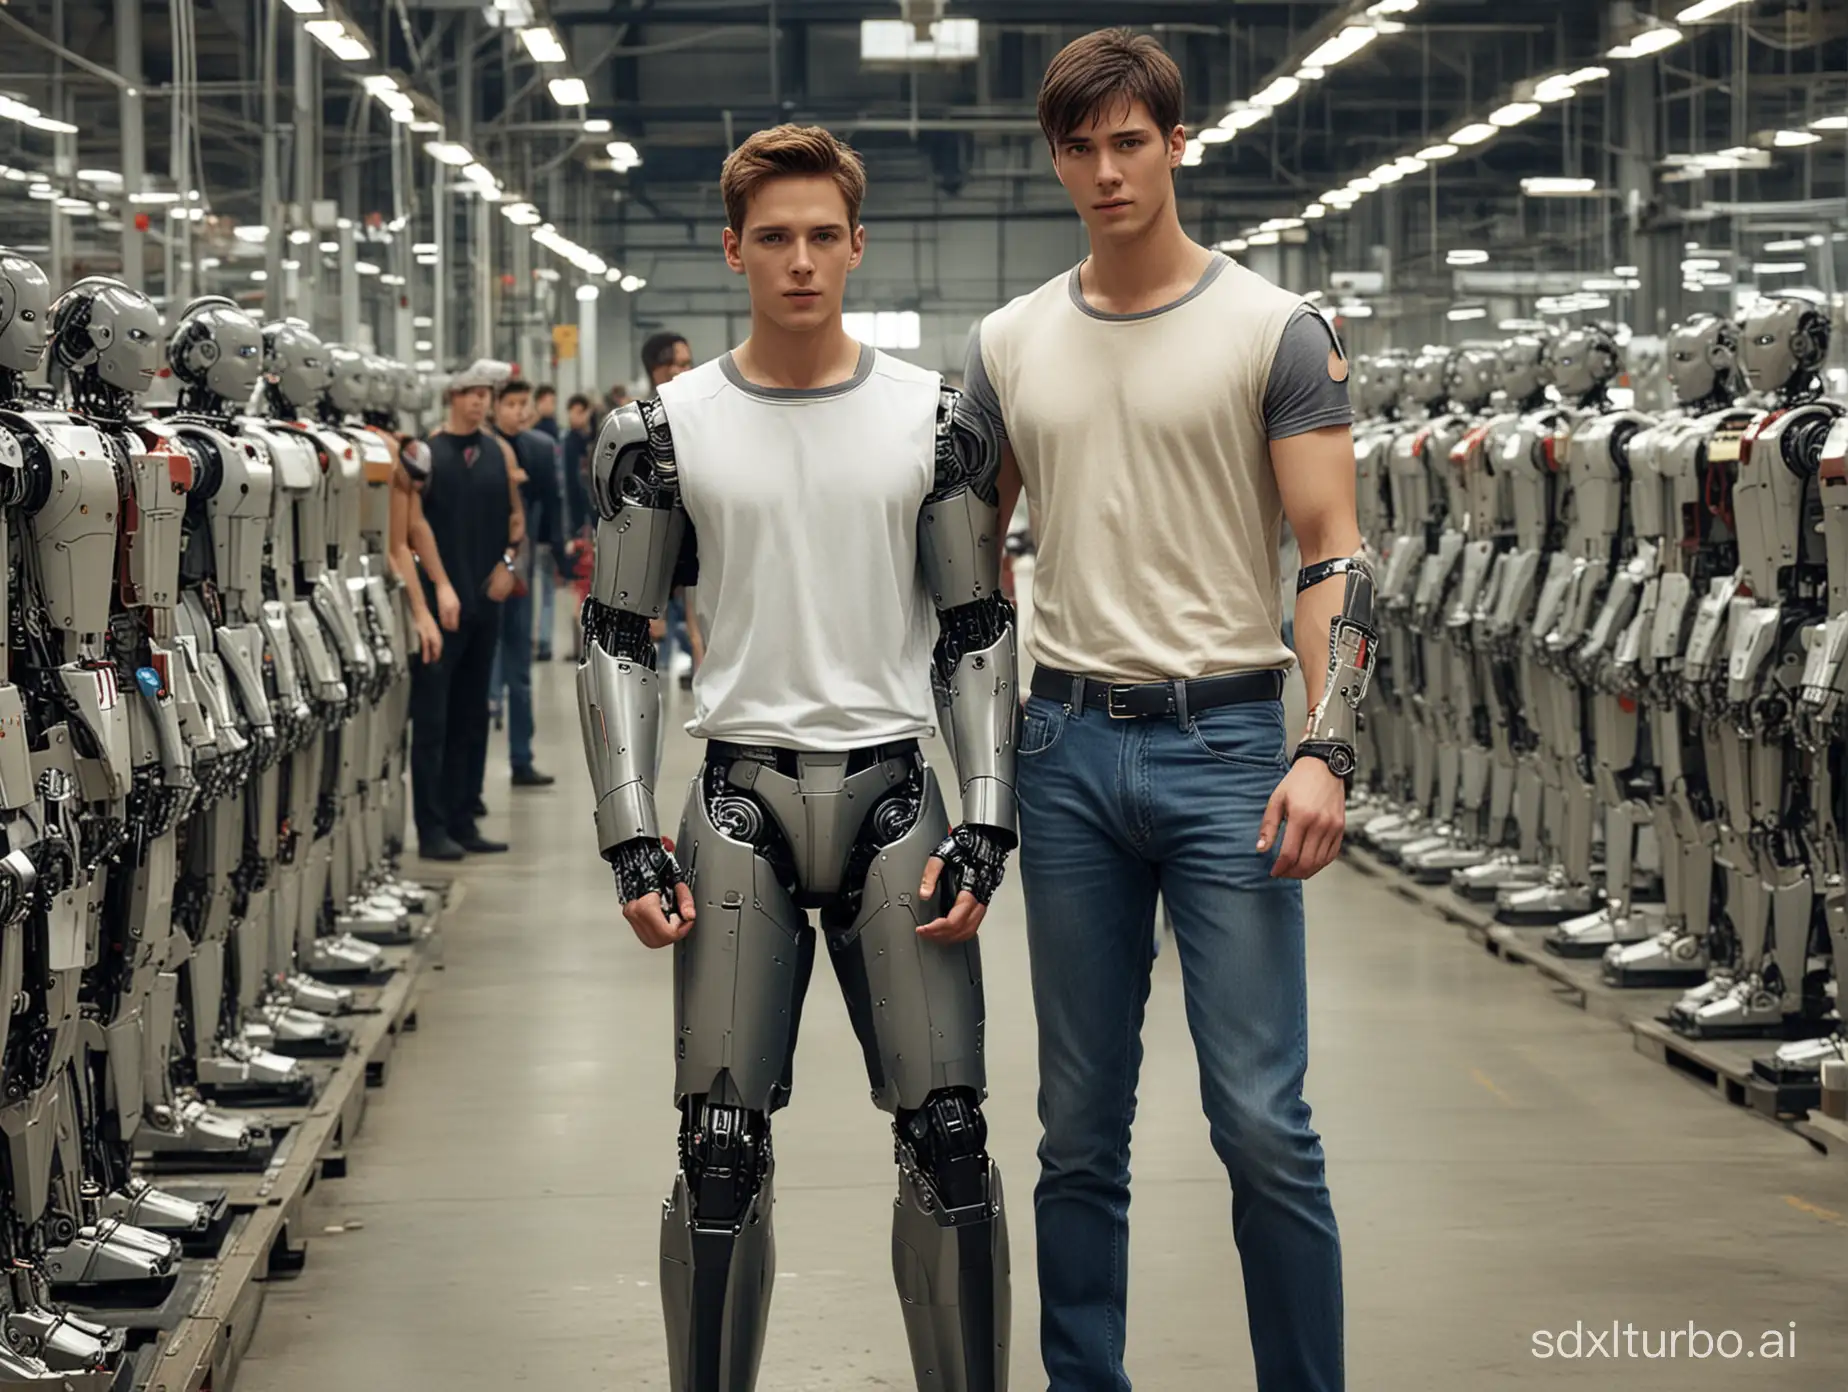 Handsome-Robot-Boyfriend-for-Sale-Factory-Production-Line-Scene